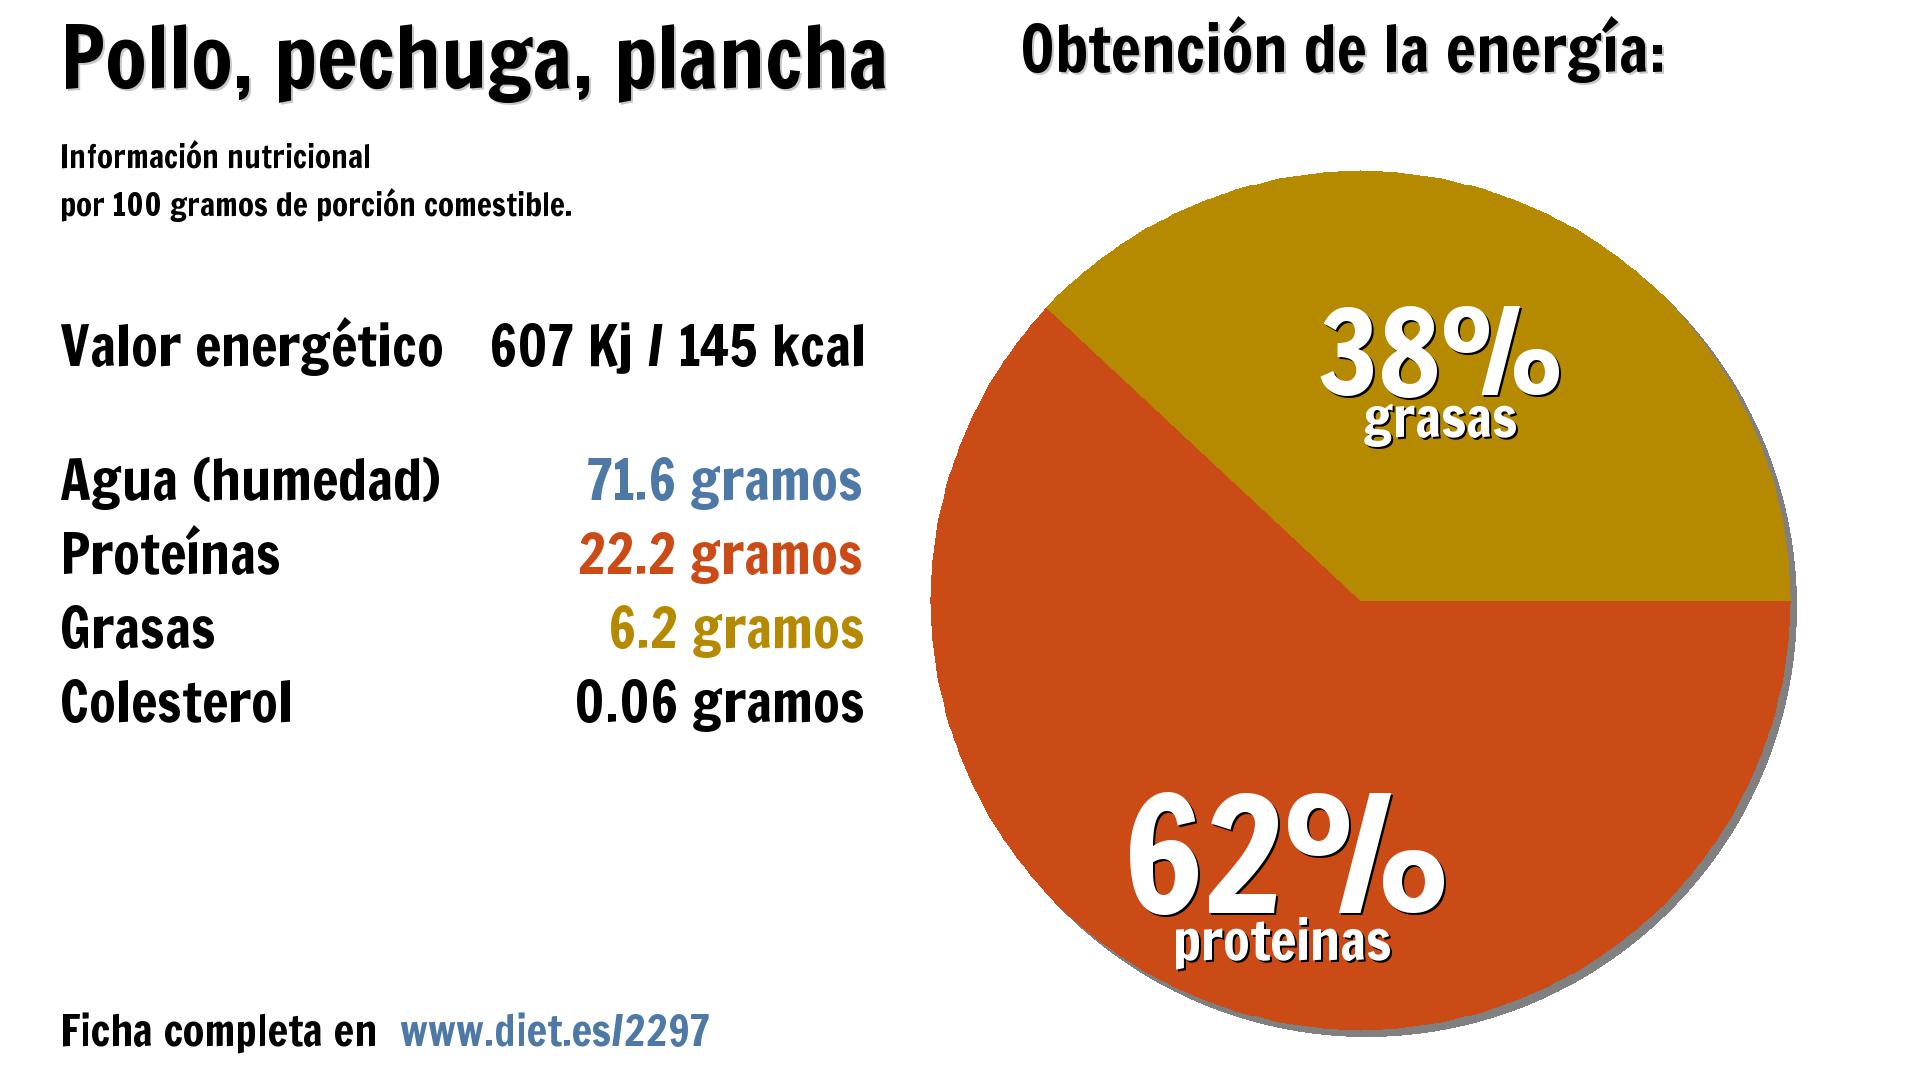 Pollo, pechuga, plancha: energía 607 Kj, agua 72 g., proteínas 22 g. y grasas 6 g.